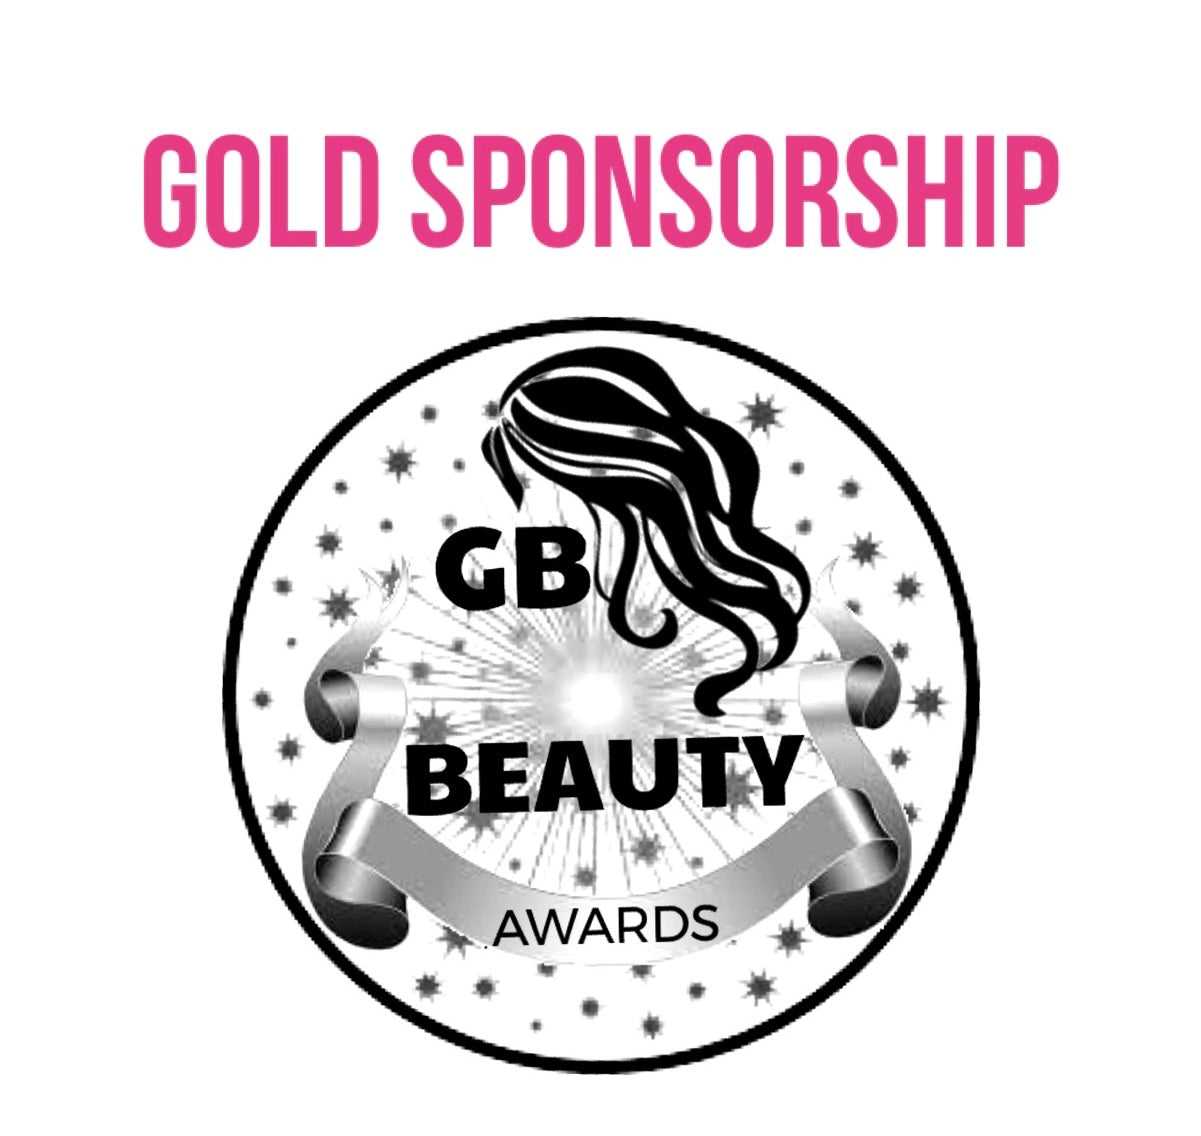 Gold Sponsorship GB Beauty  Awards